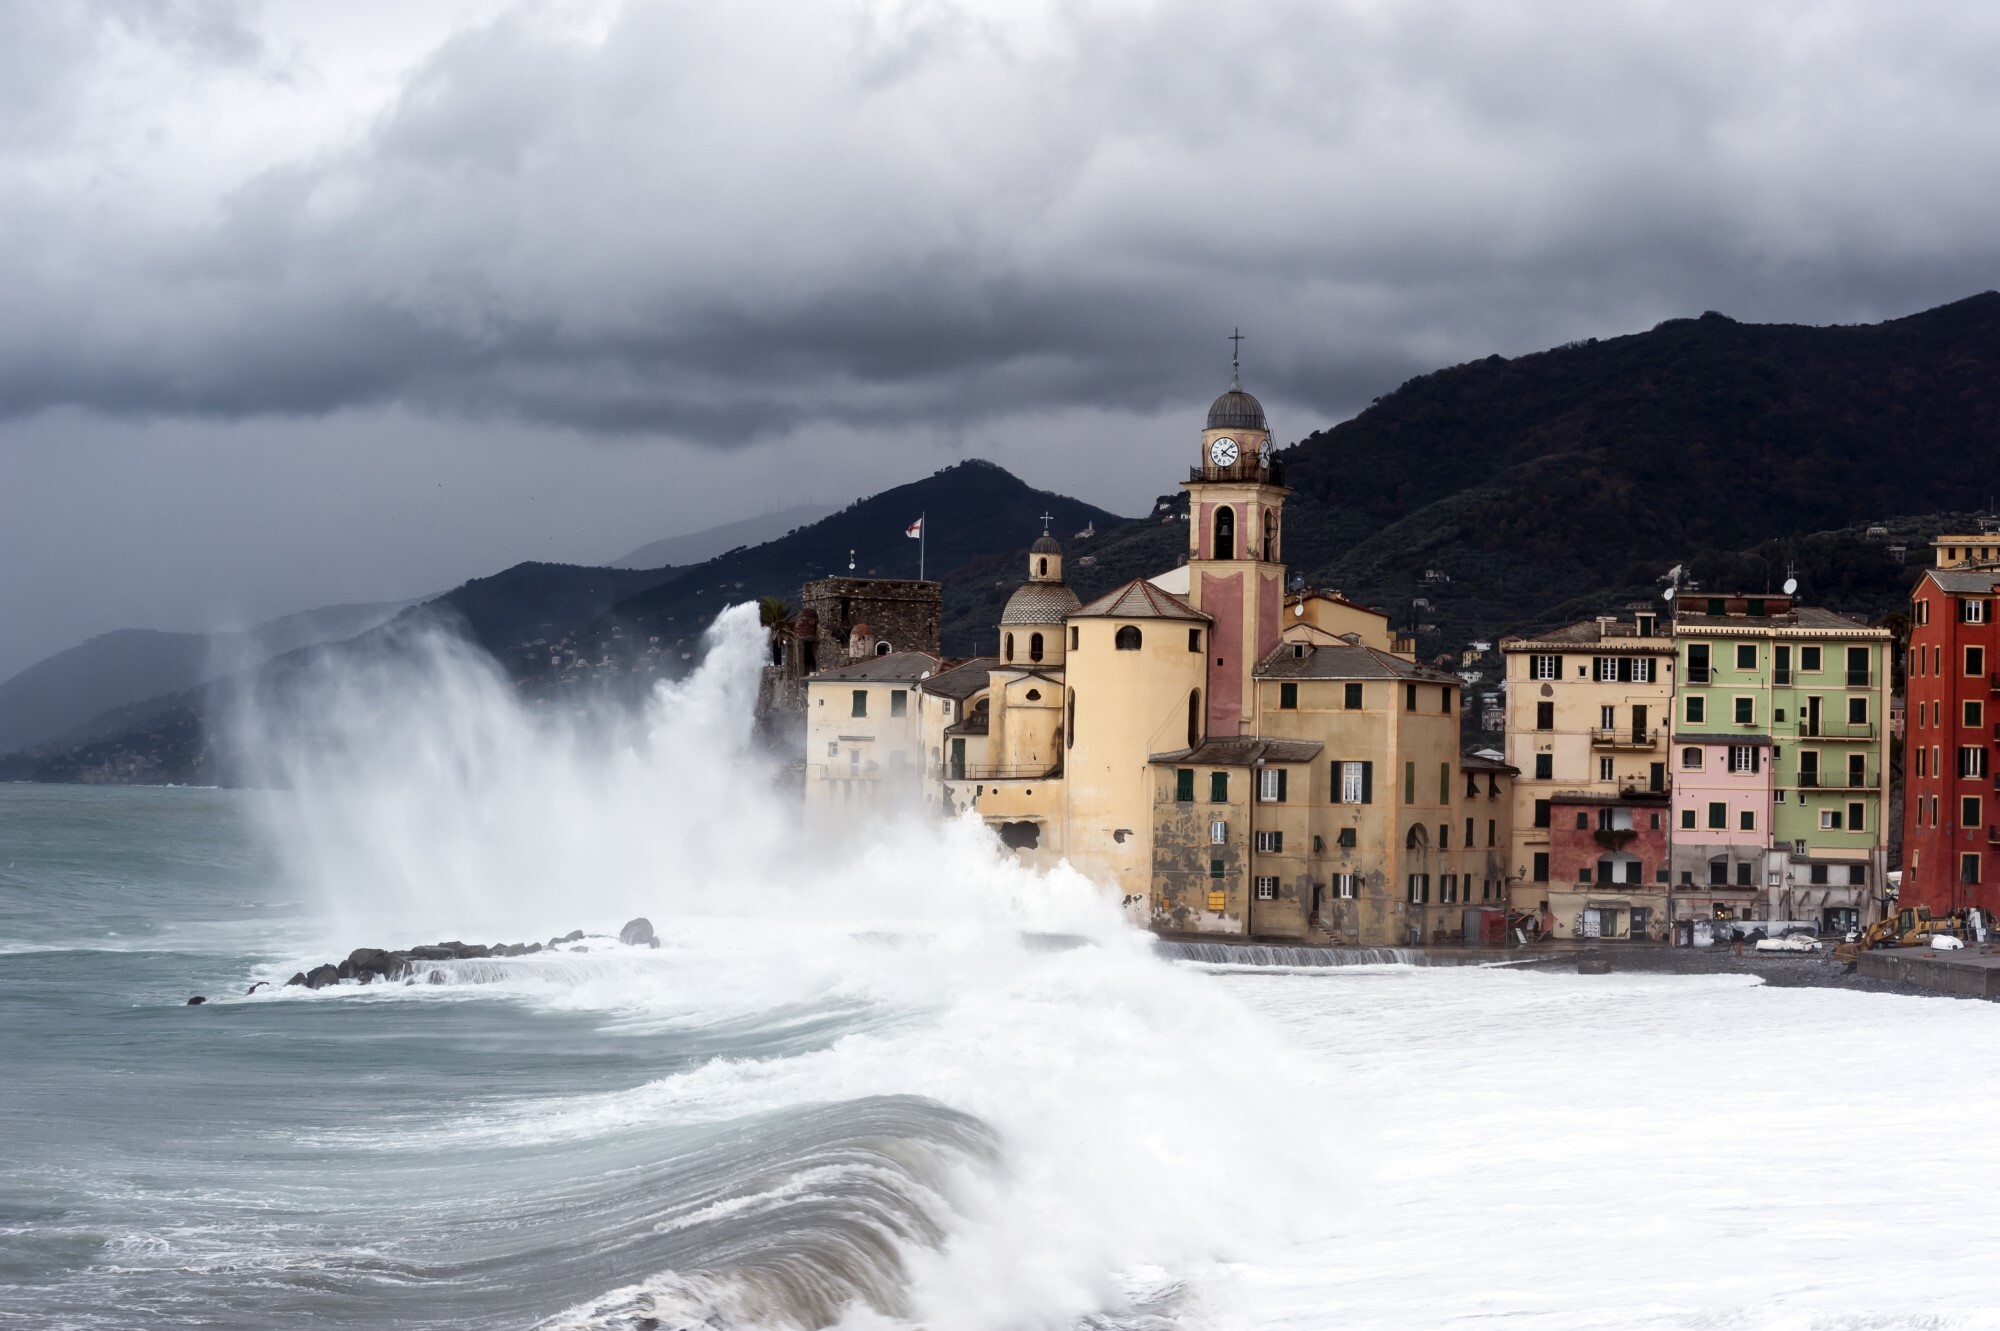 Storm surge pixabay